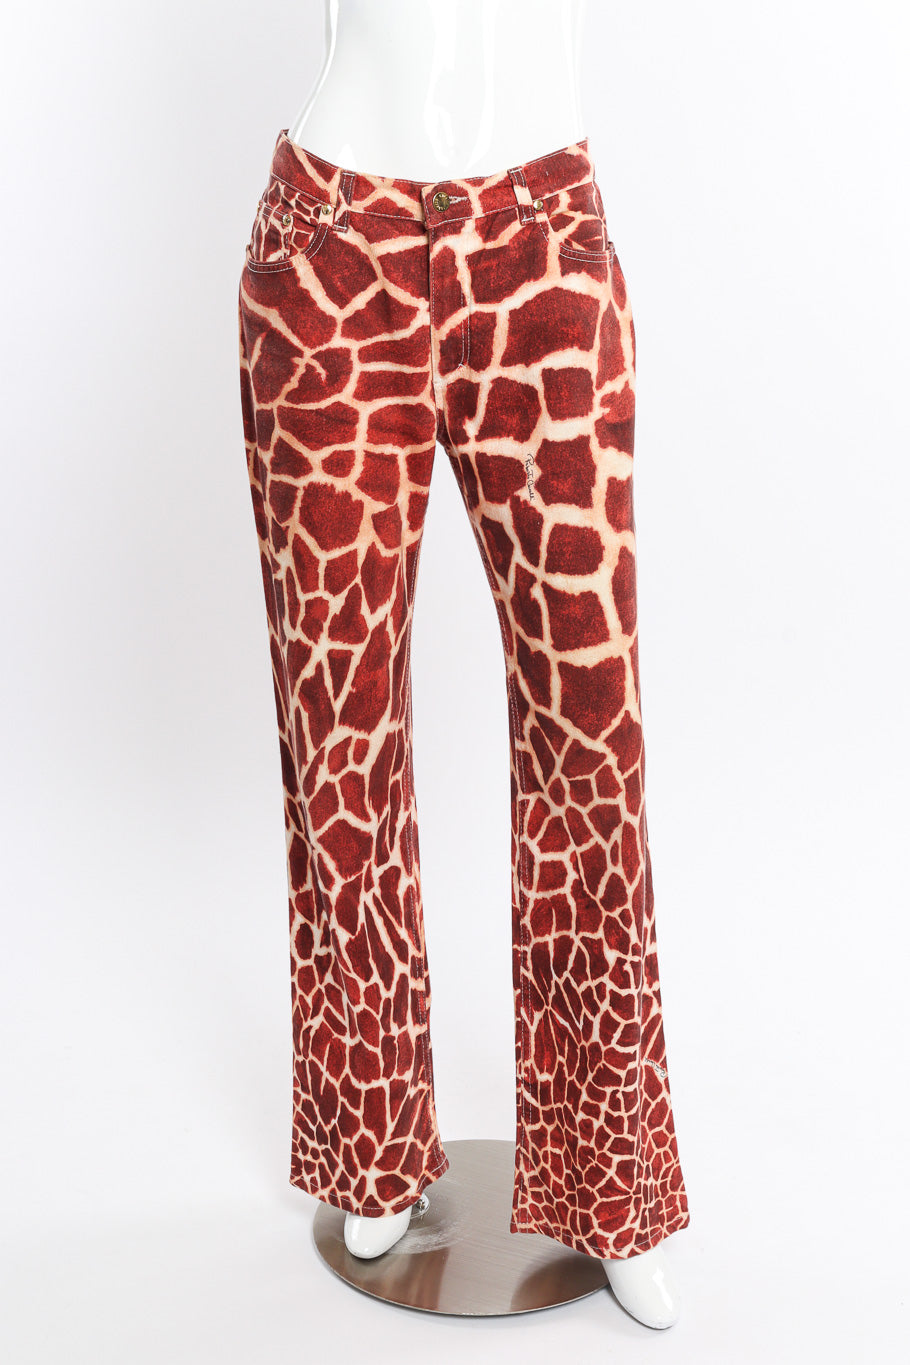 Vintage Roberto Cavalli Giraffe Print Flare Jeans front view on mannequin @Recessla